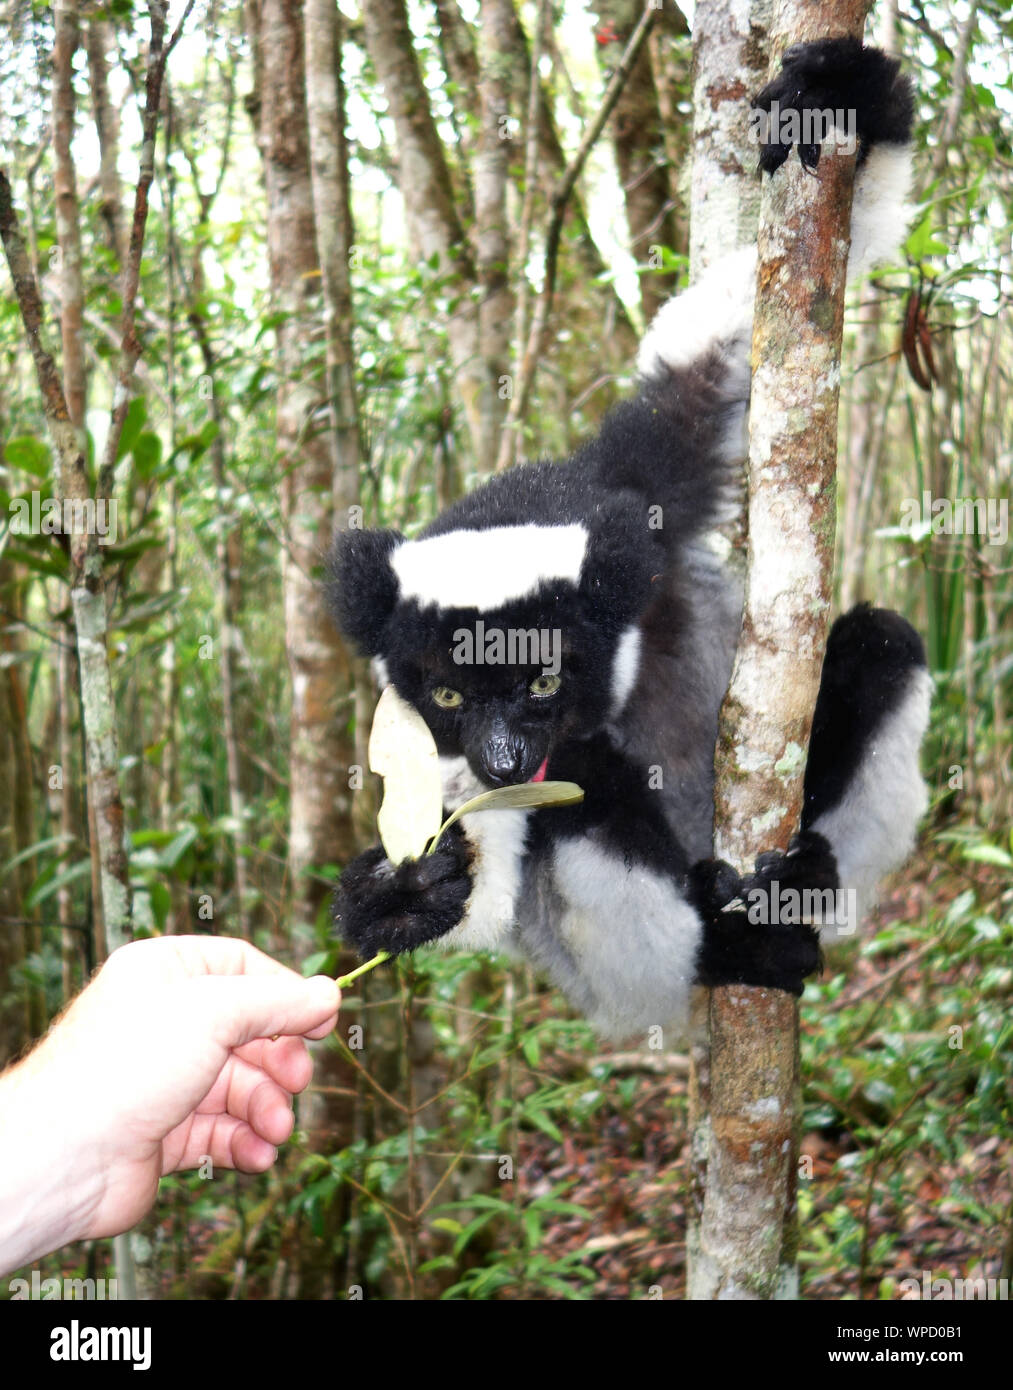 Wild indri Indri tomando la hoja de turista, Parc Mitsinjo, Andasibe, Madagascar. No, señor Foto de stock